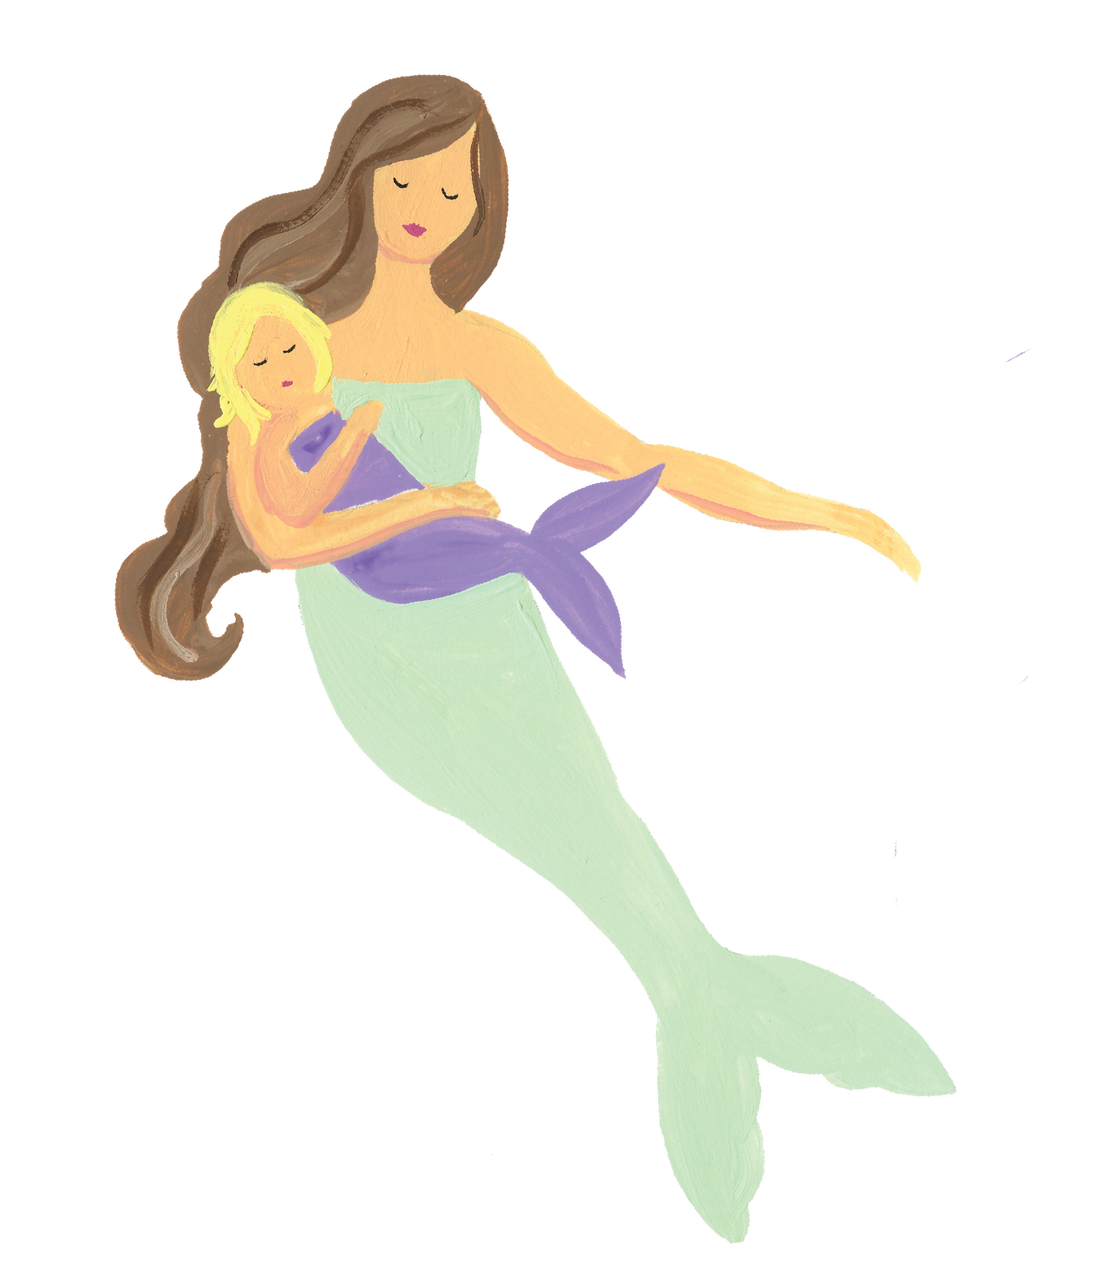 Mermaid with Baby Print & Cut File